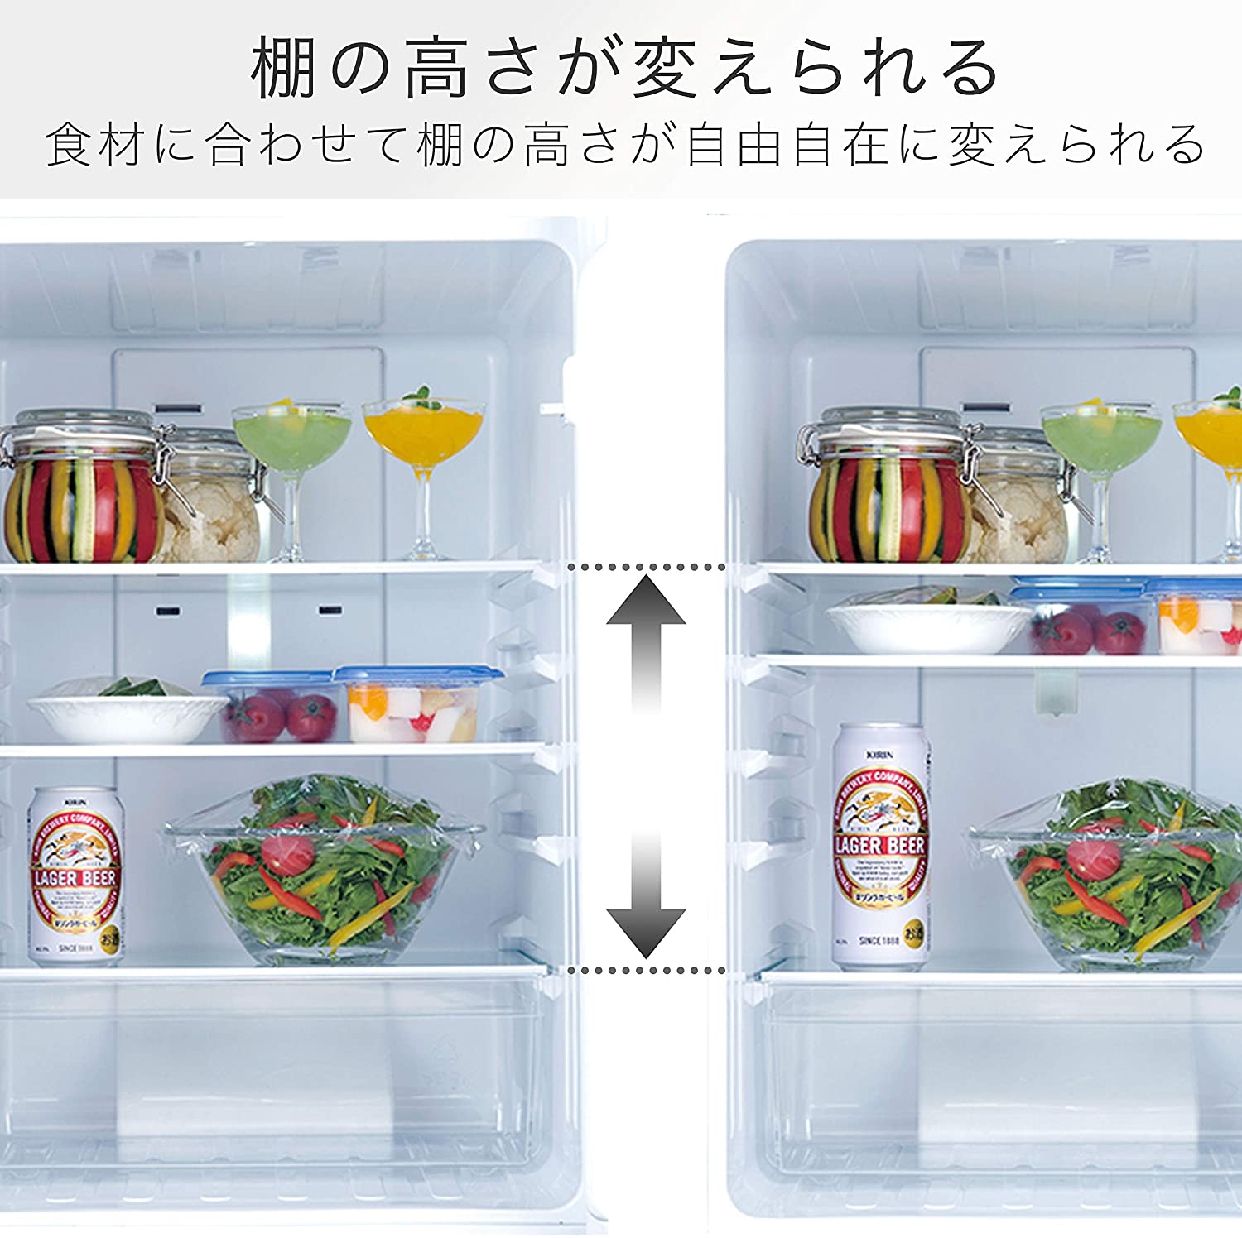 Hisense(ハイセンス) 150L 冷凍冷蔵庫 HR-D15Cの商品画像サムネ8 